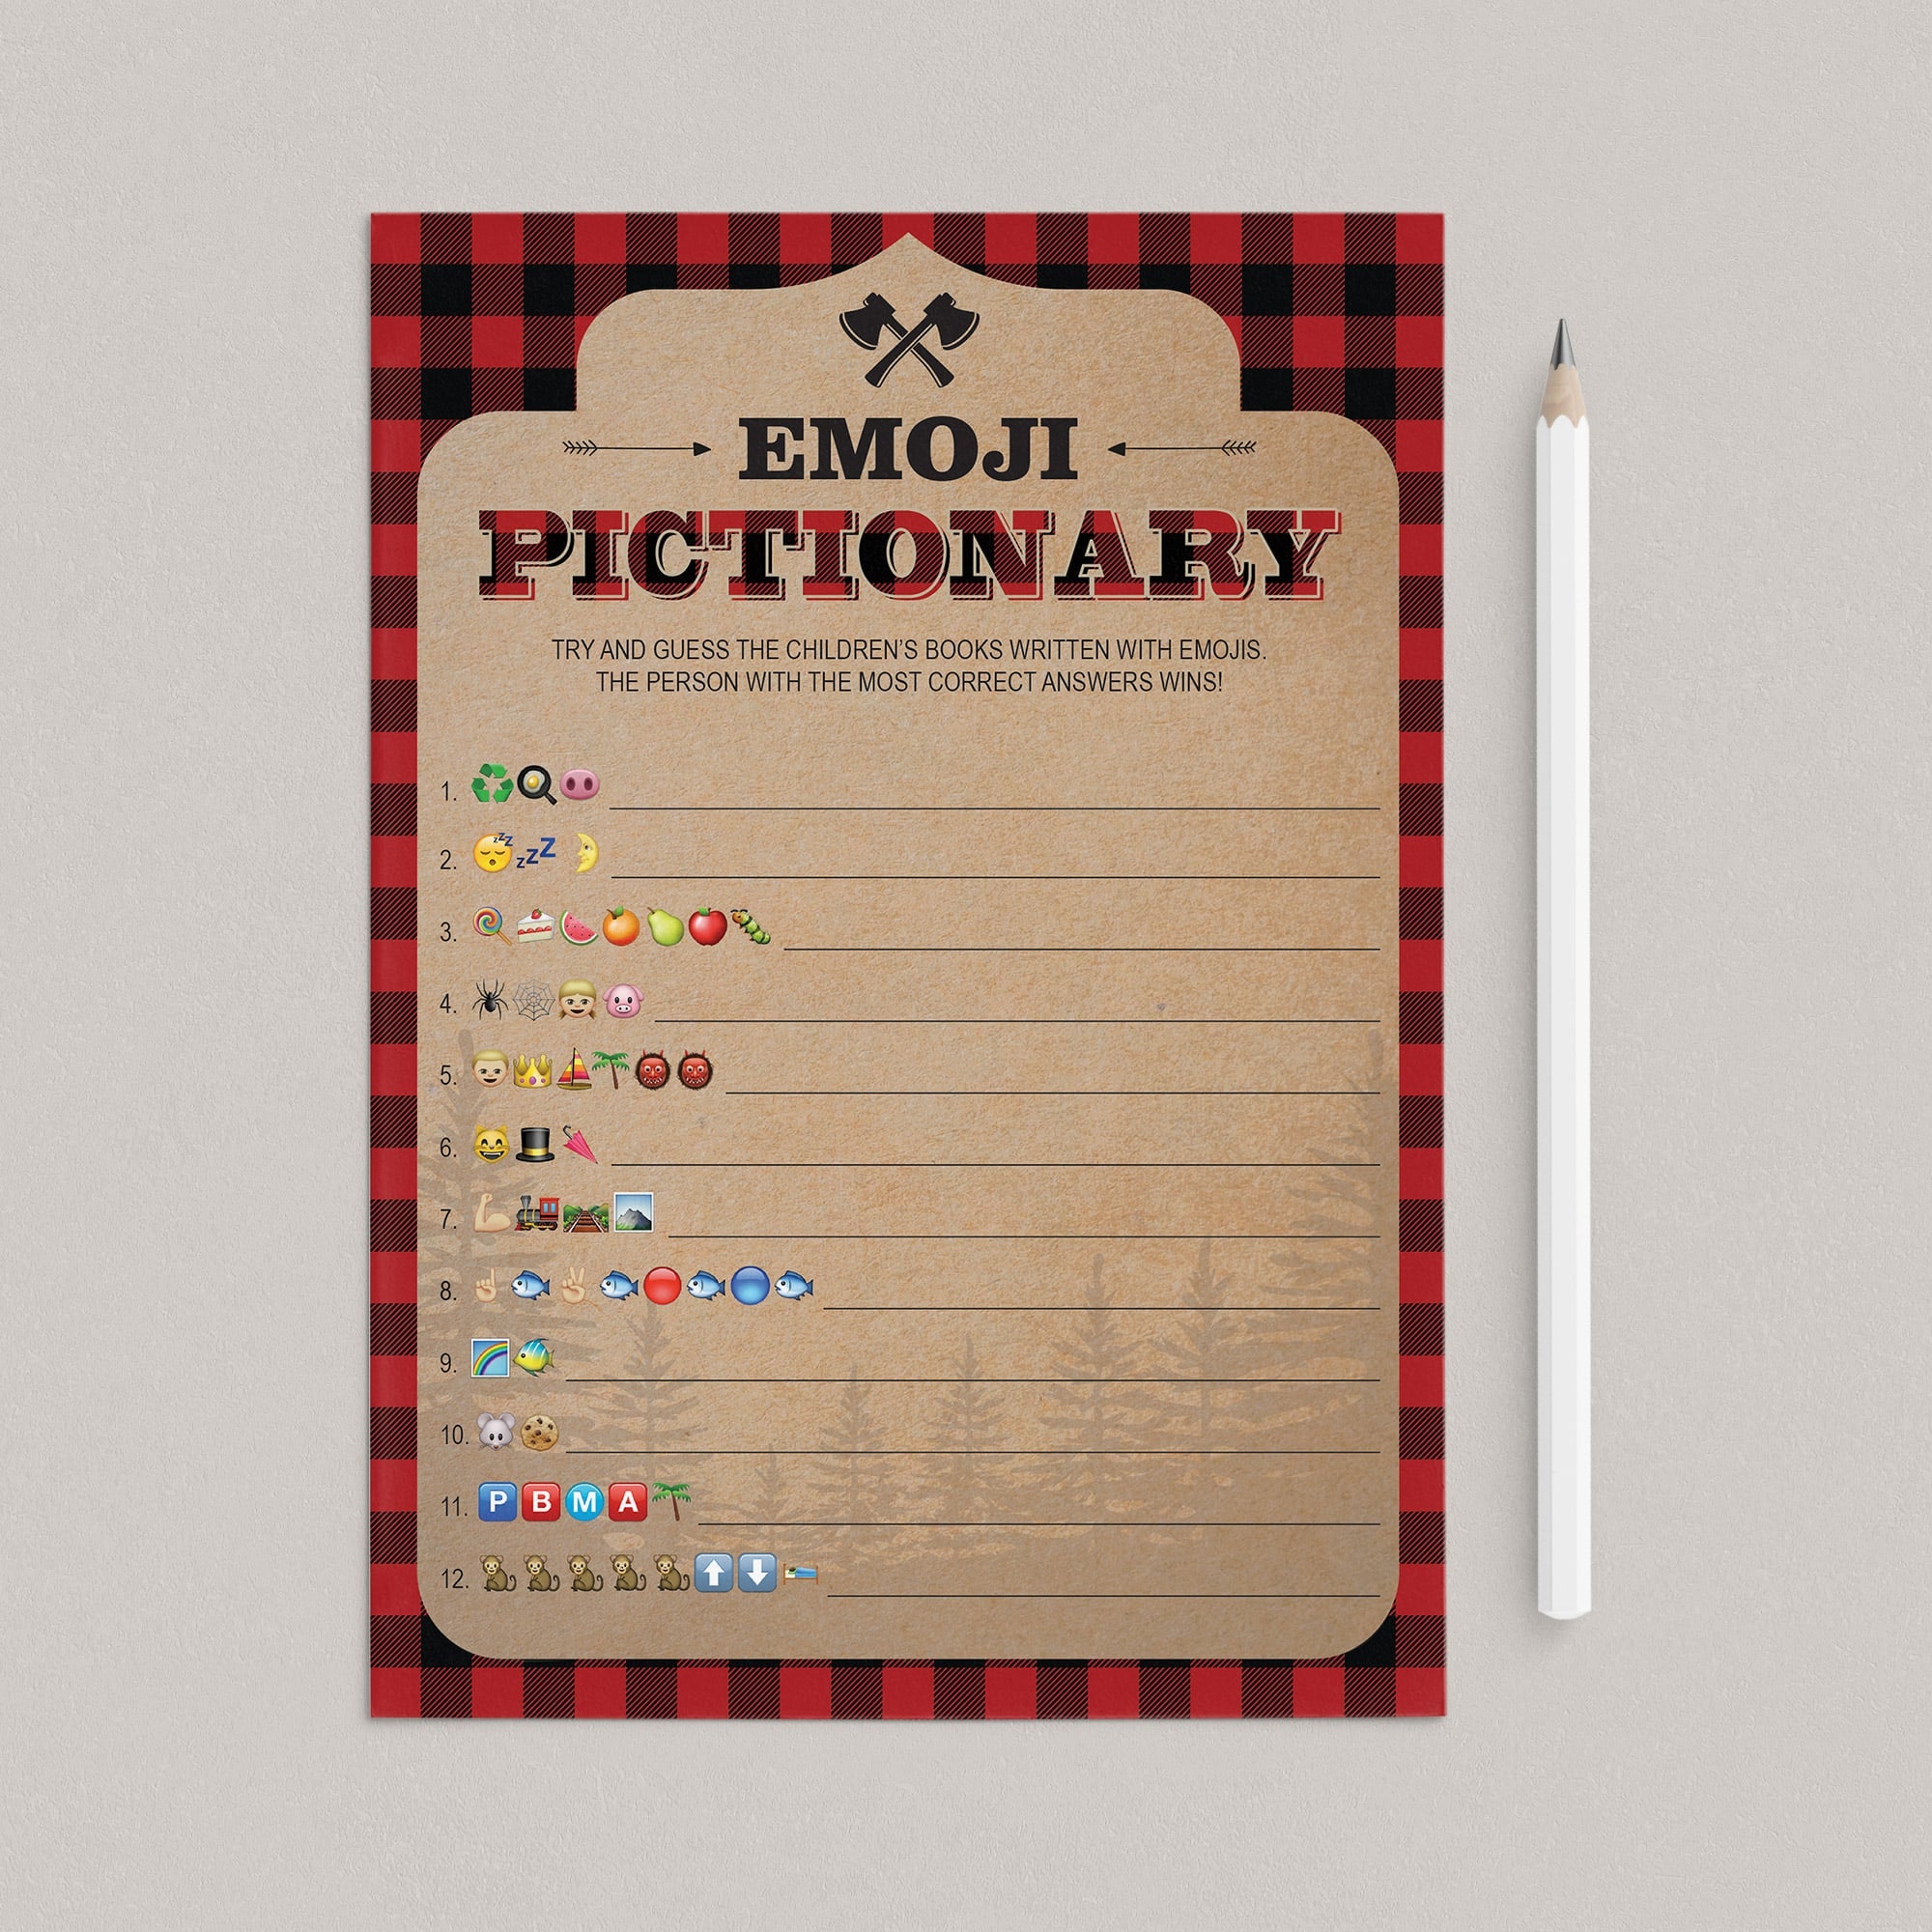 Lumberjack shower emoji pictionary printable by LittleSizzle